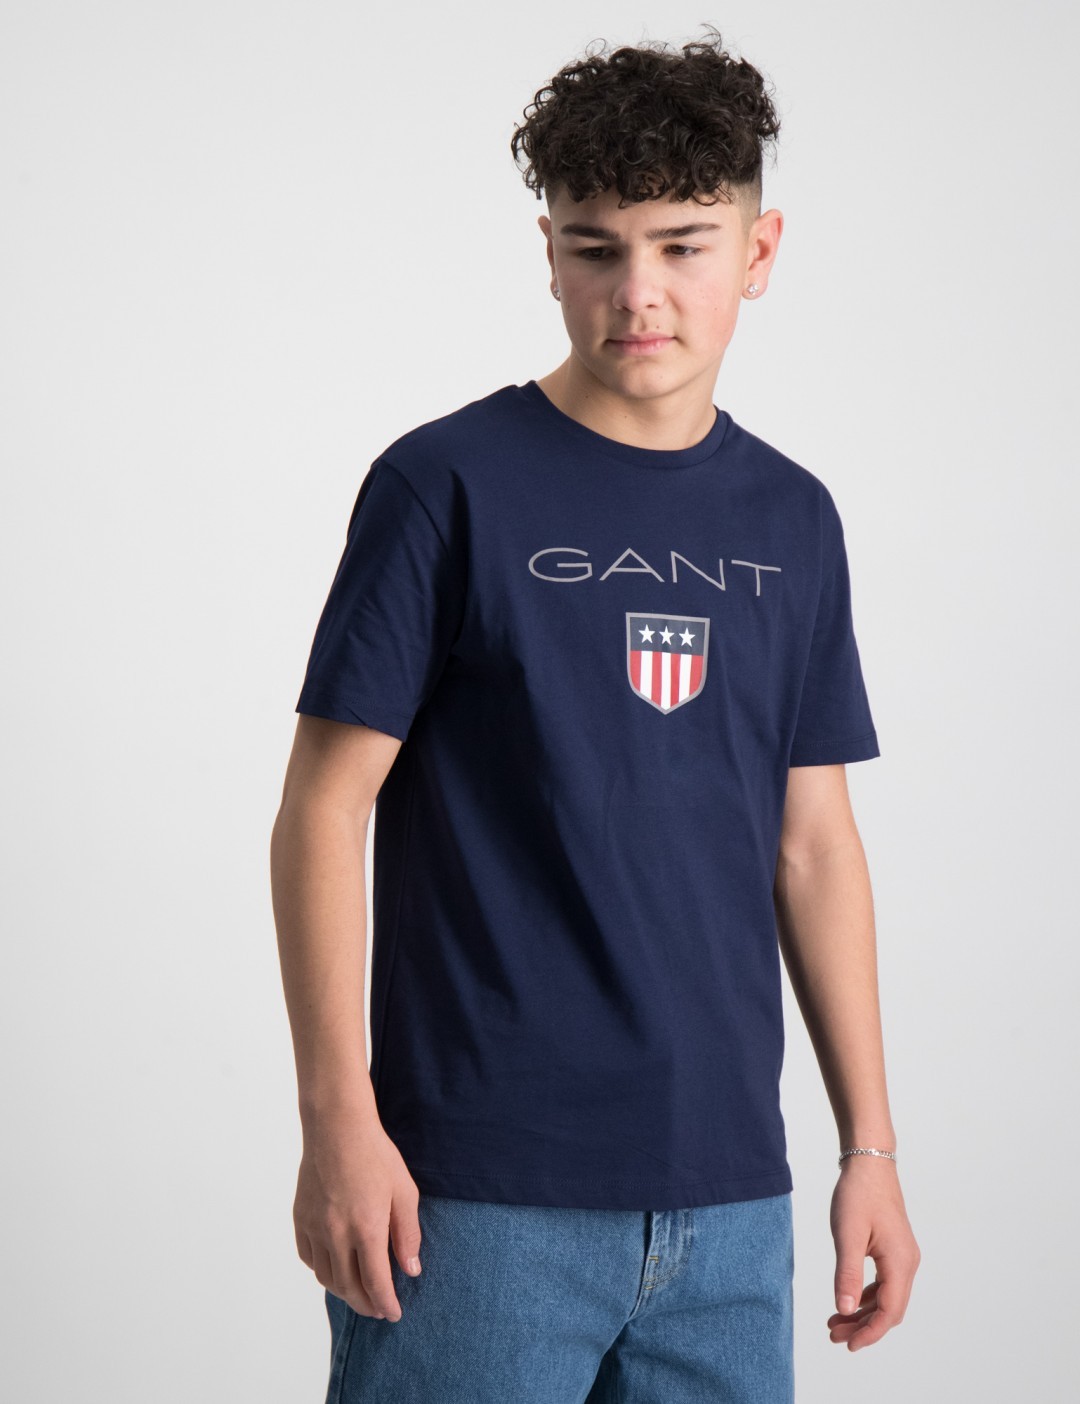 SS Pojat GANT | Brand Sininen Kids T-SHIRT Store varten SHIELD